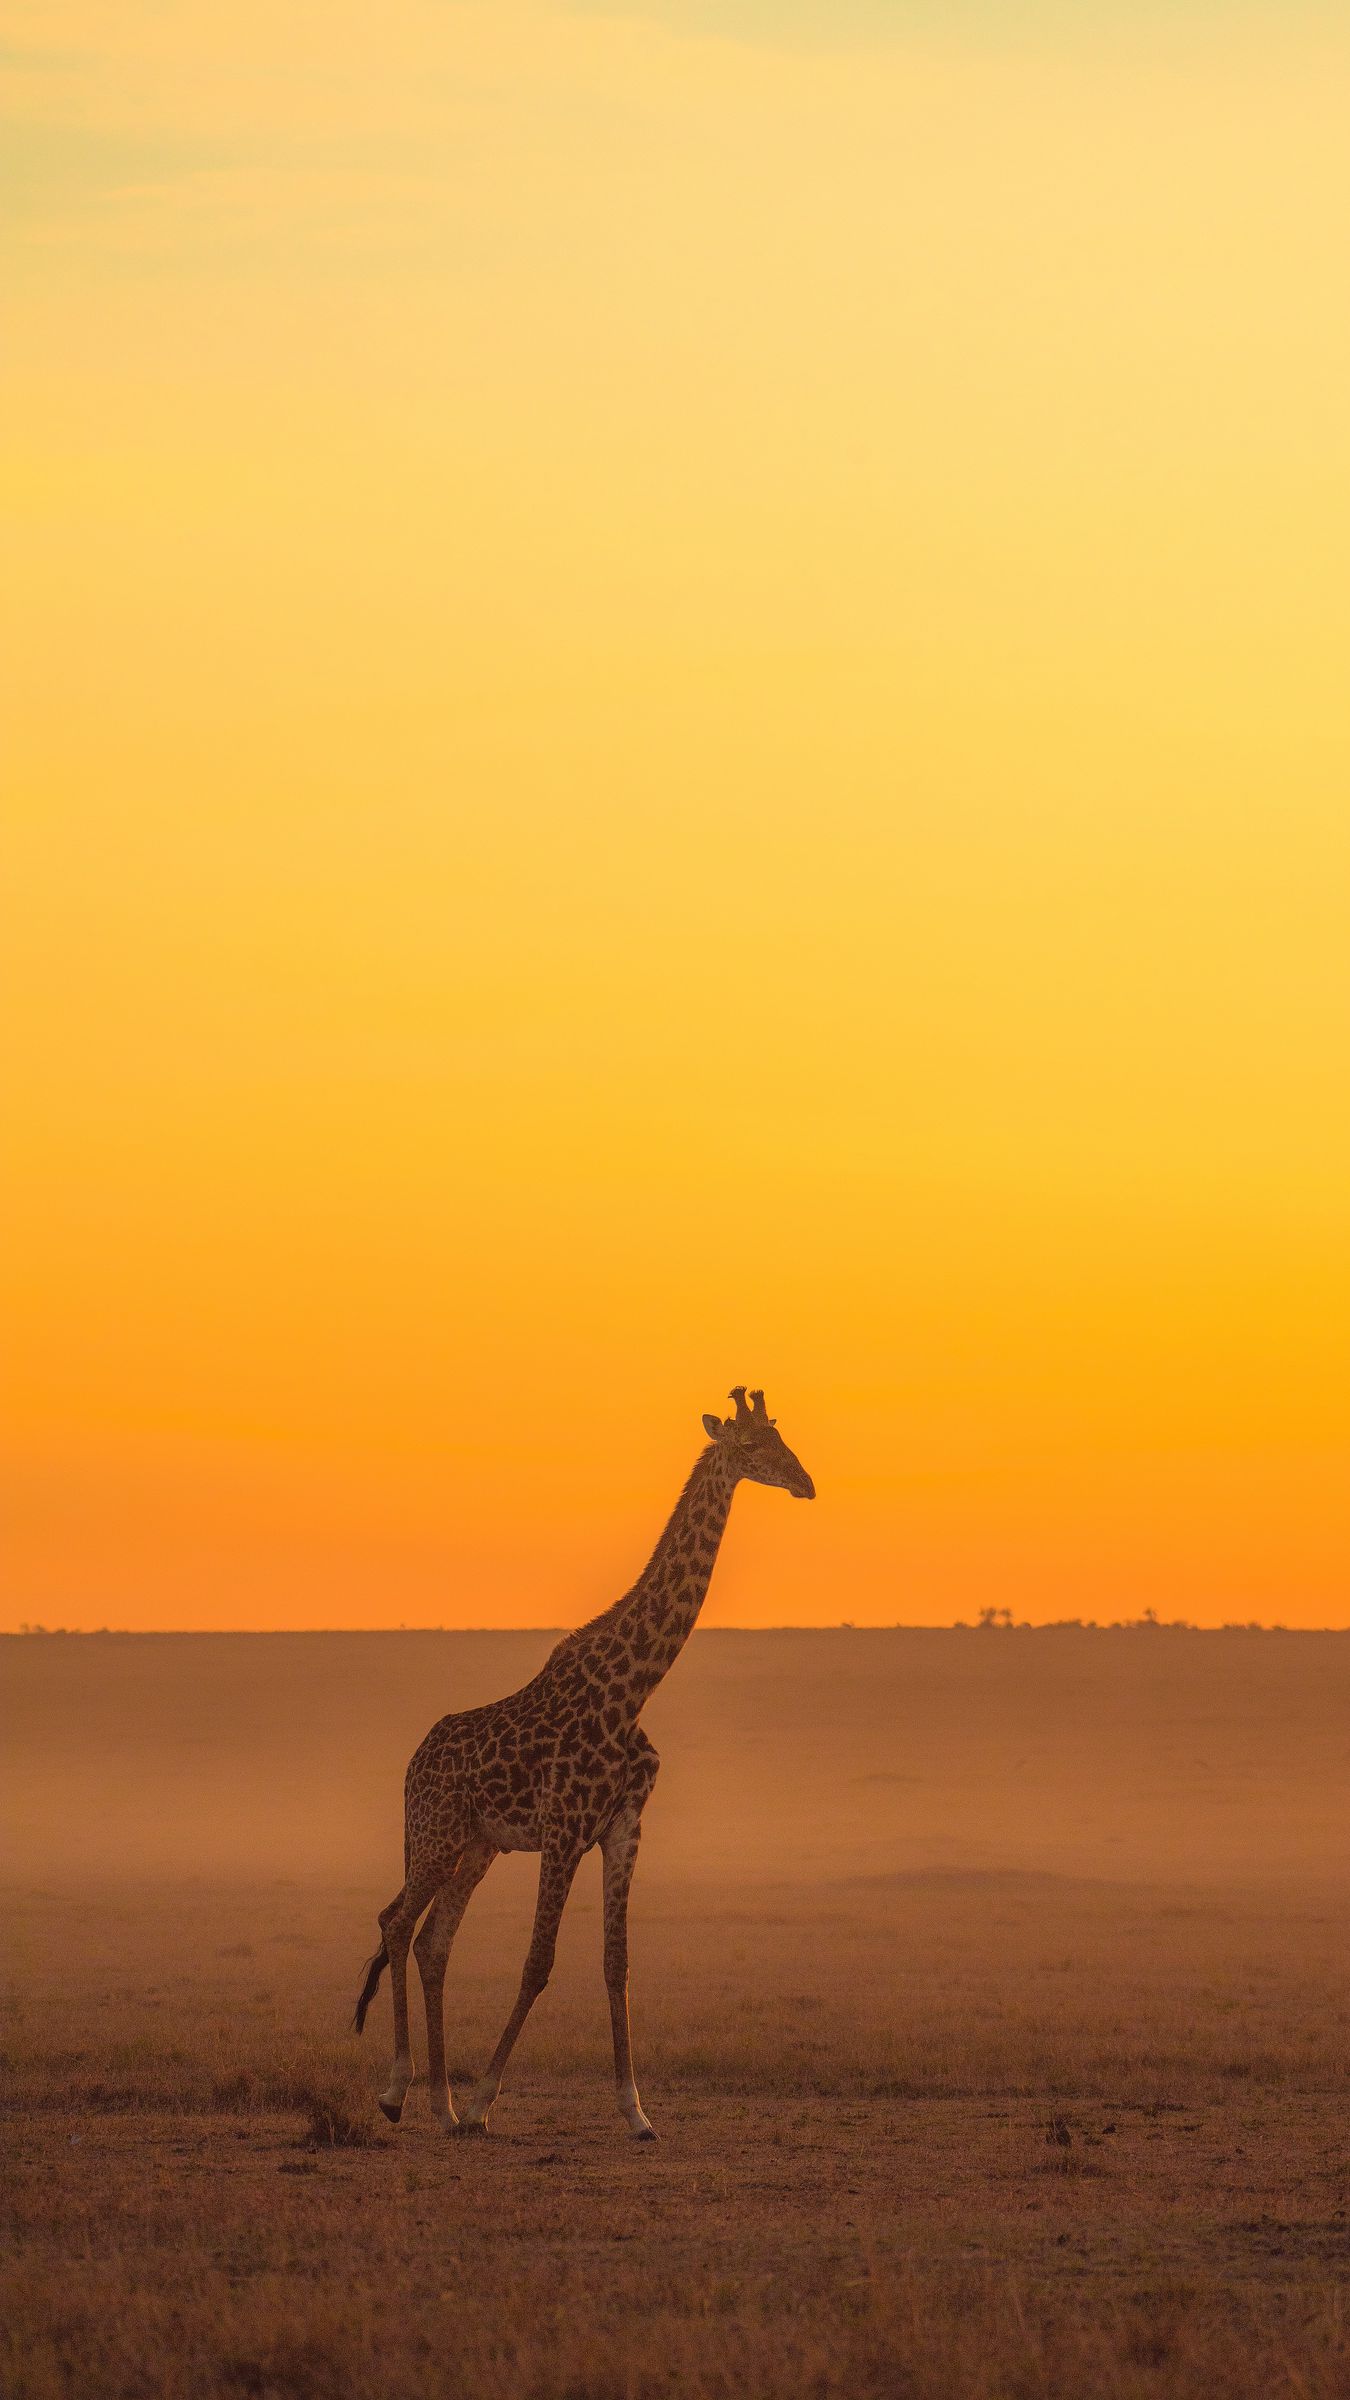 Wallpaper Giraffe Terrestrial Animal Savanna Hair Head Background   Download Free Image